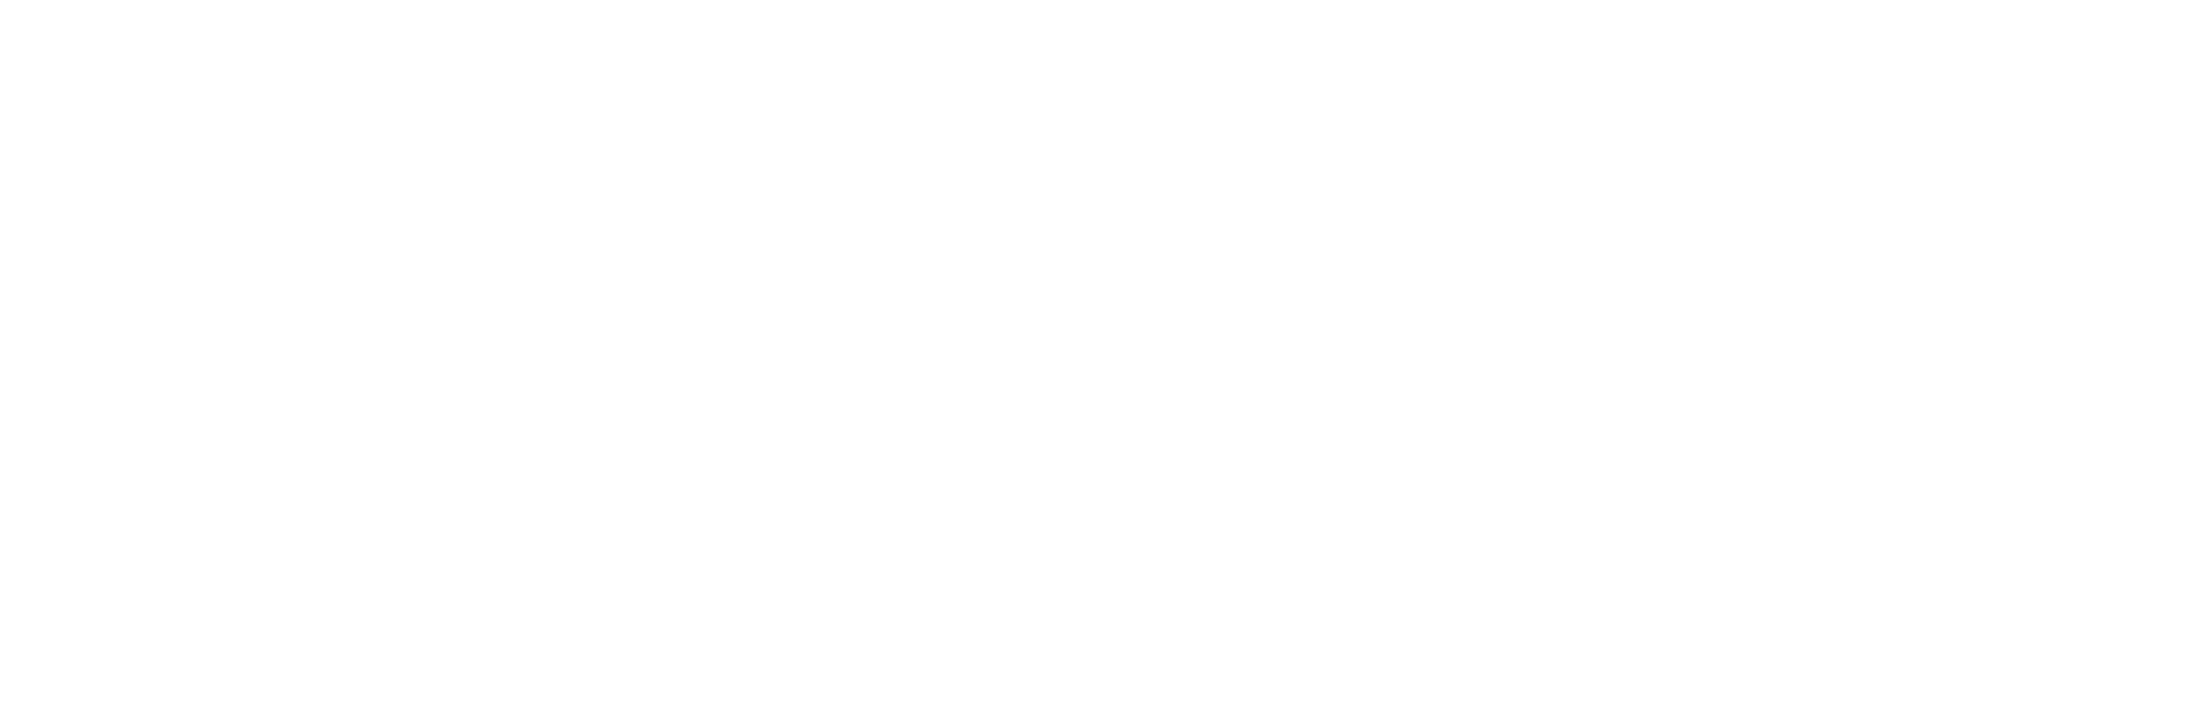 Capita logo white